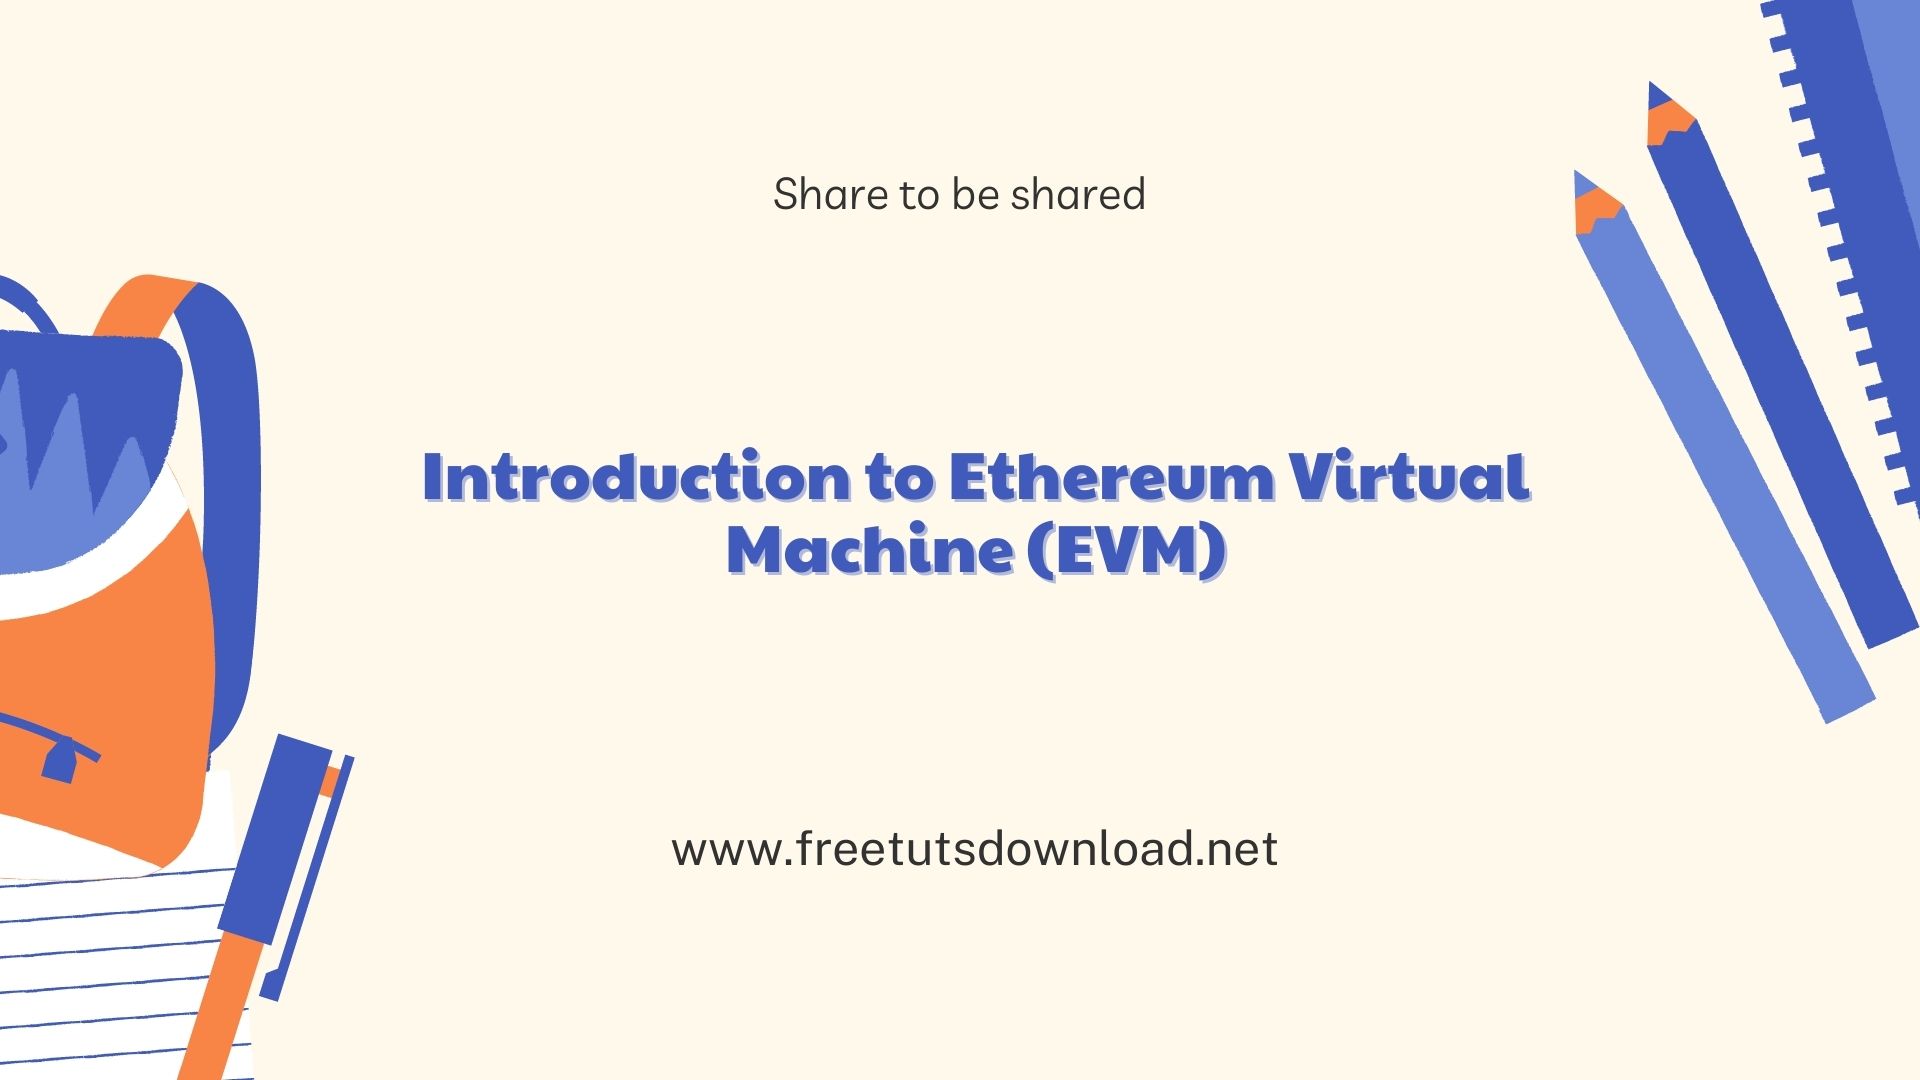 Introduction to Ethereum Virtual Machine (EVM)